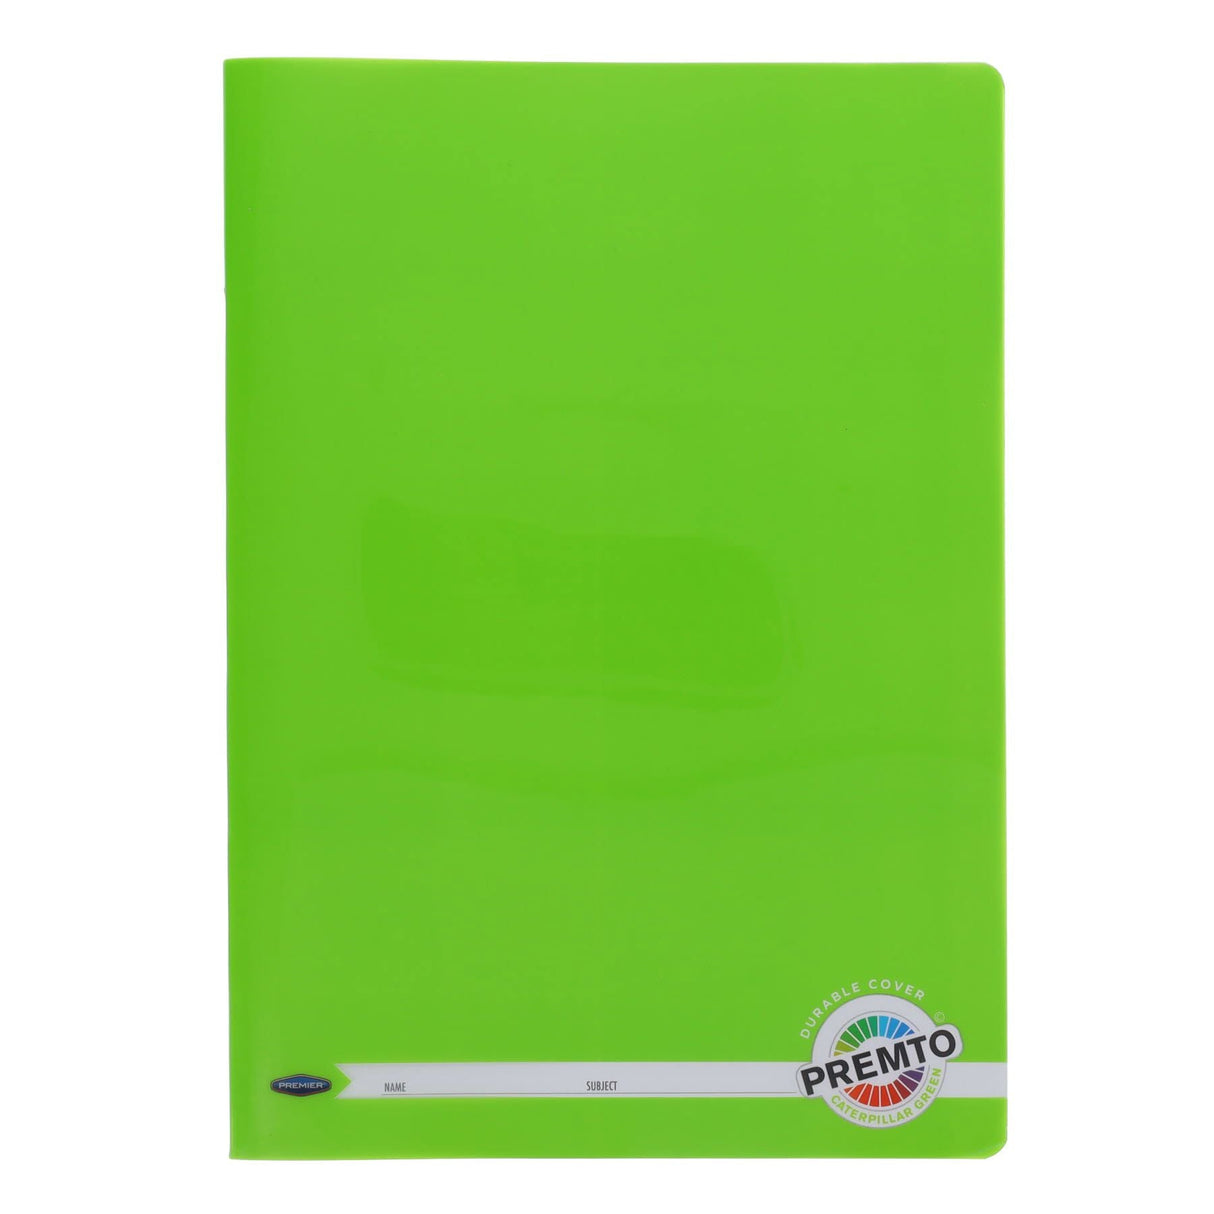 Premto A4 Durable Cover Manuscript Book S1 - 120 Pages - Caterpillar Green-Manuscript Books-Premto|StationeryShop.co.uk